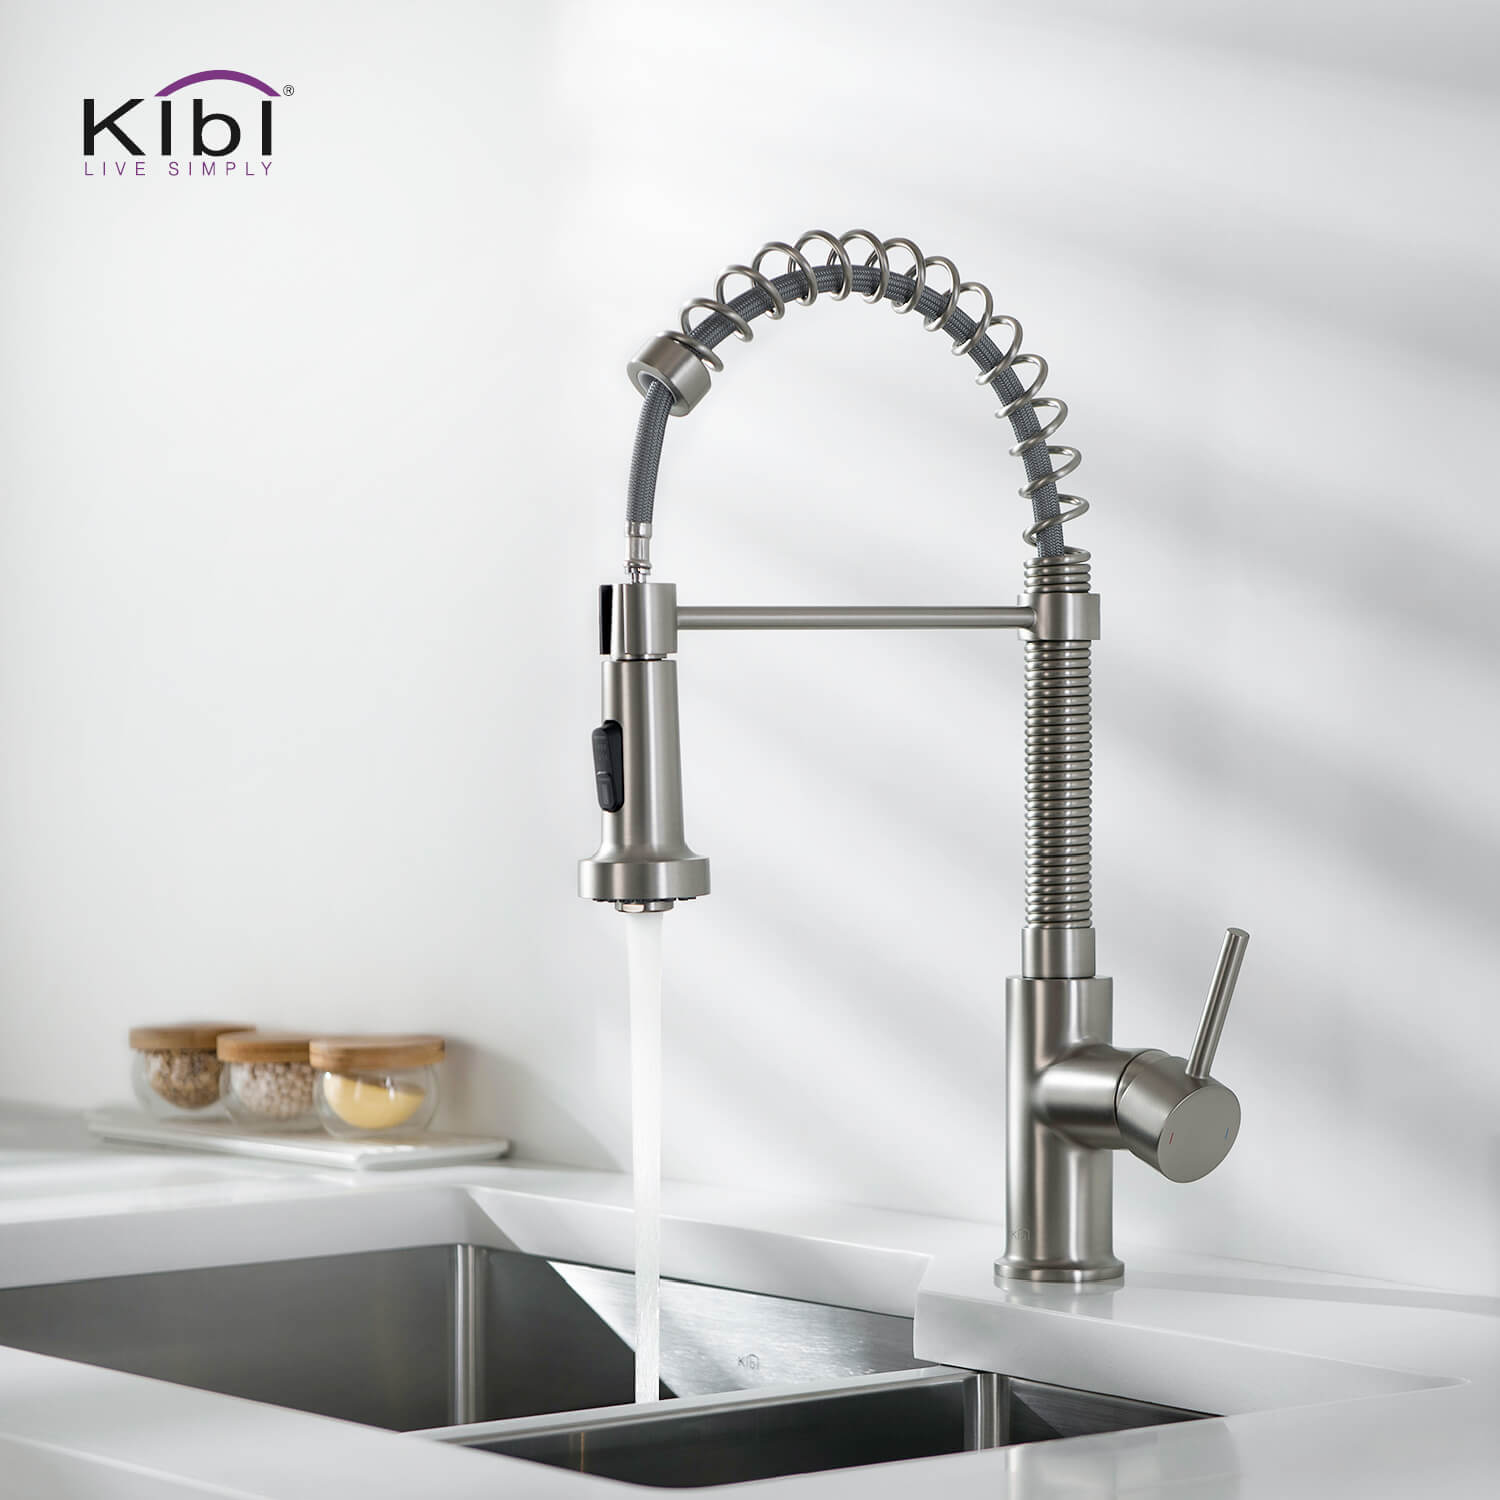 Kibi Aurora Single Handle High Arc Pull Down Kitchen Faucet In Chrome Finish